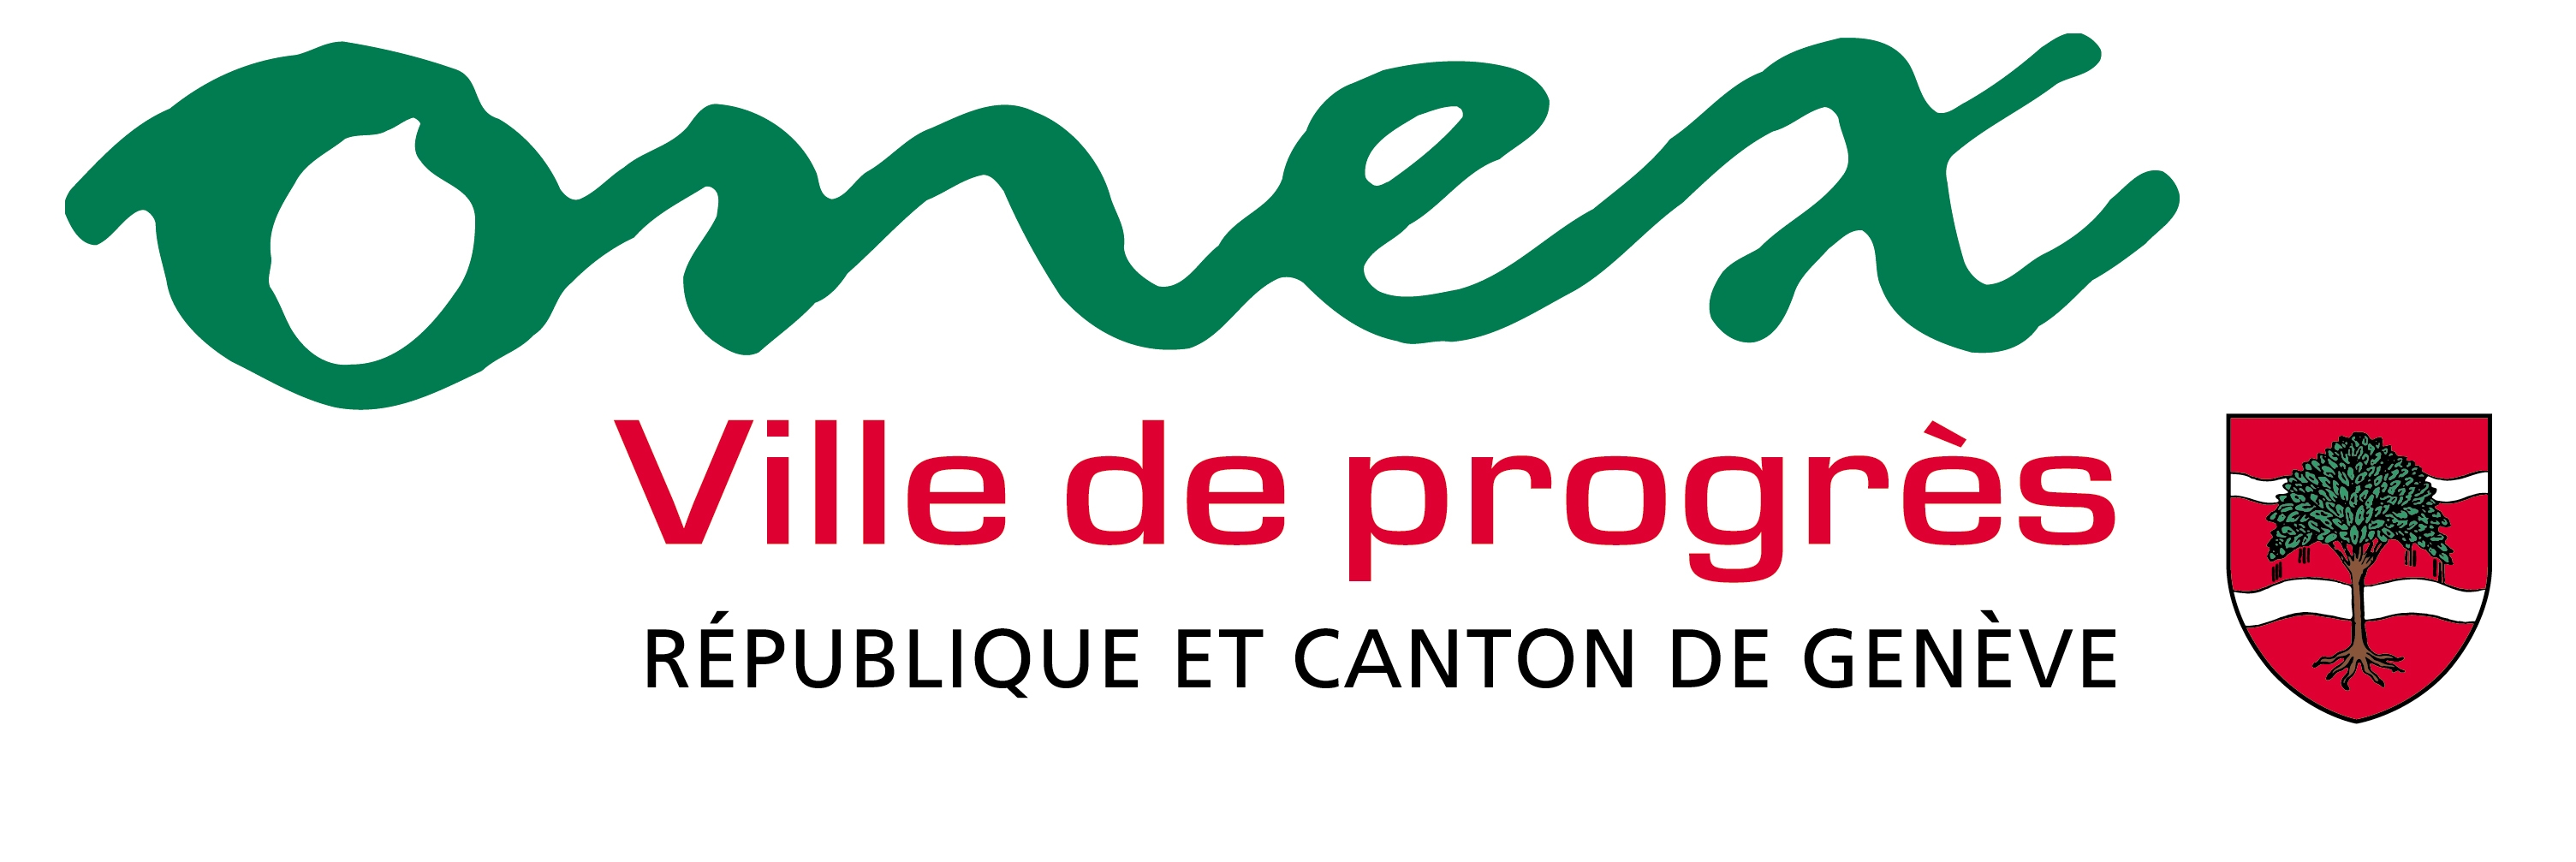 logo onex